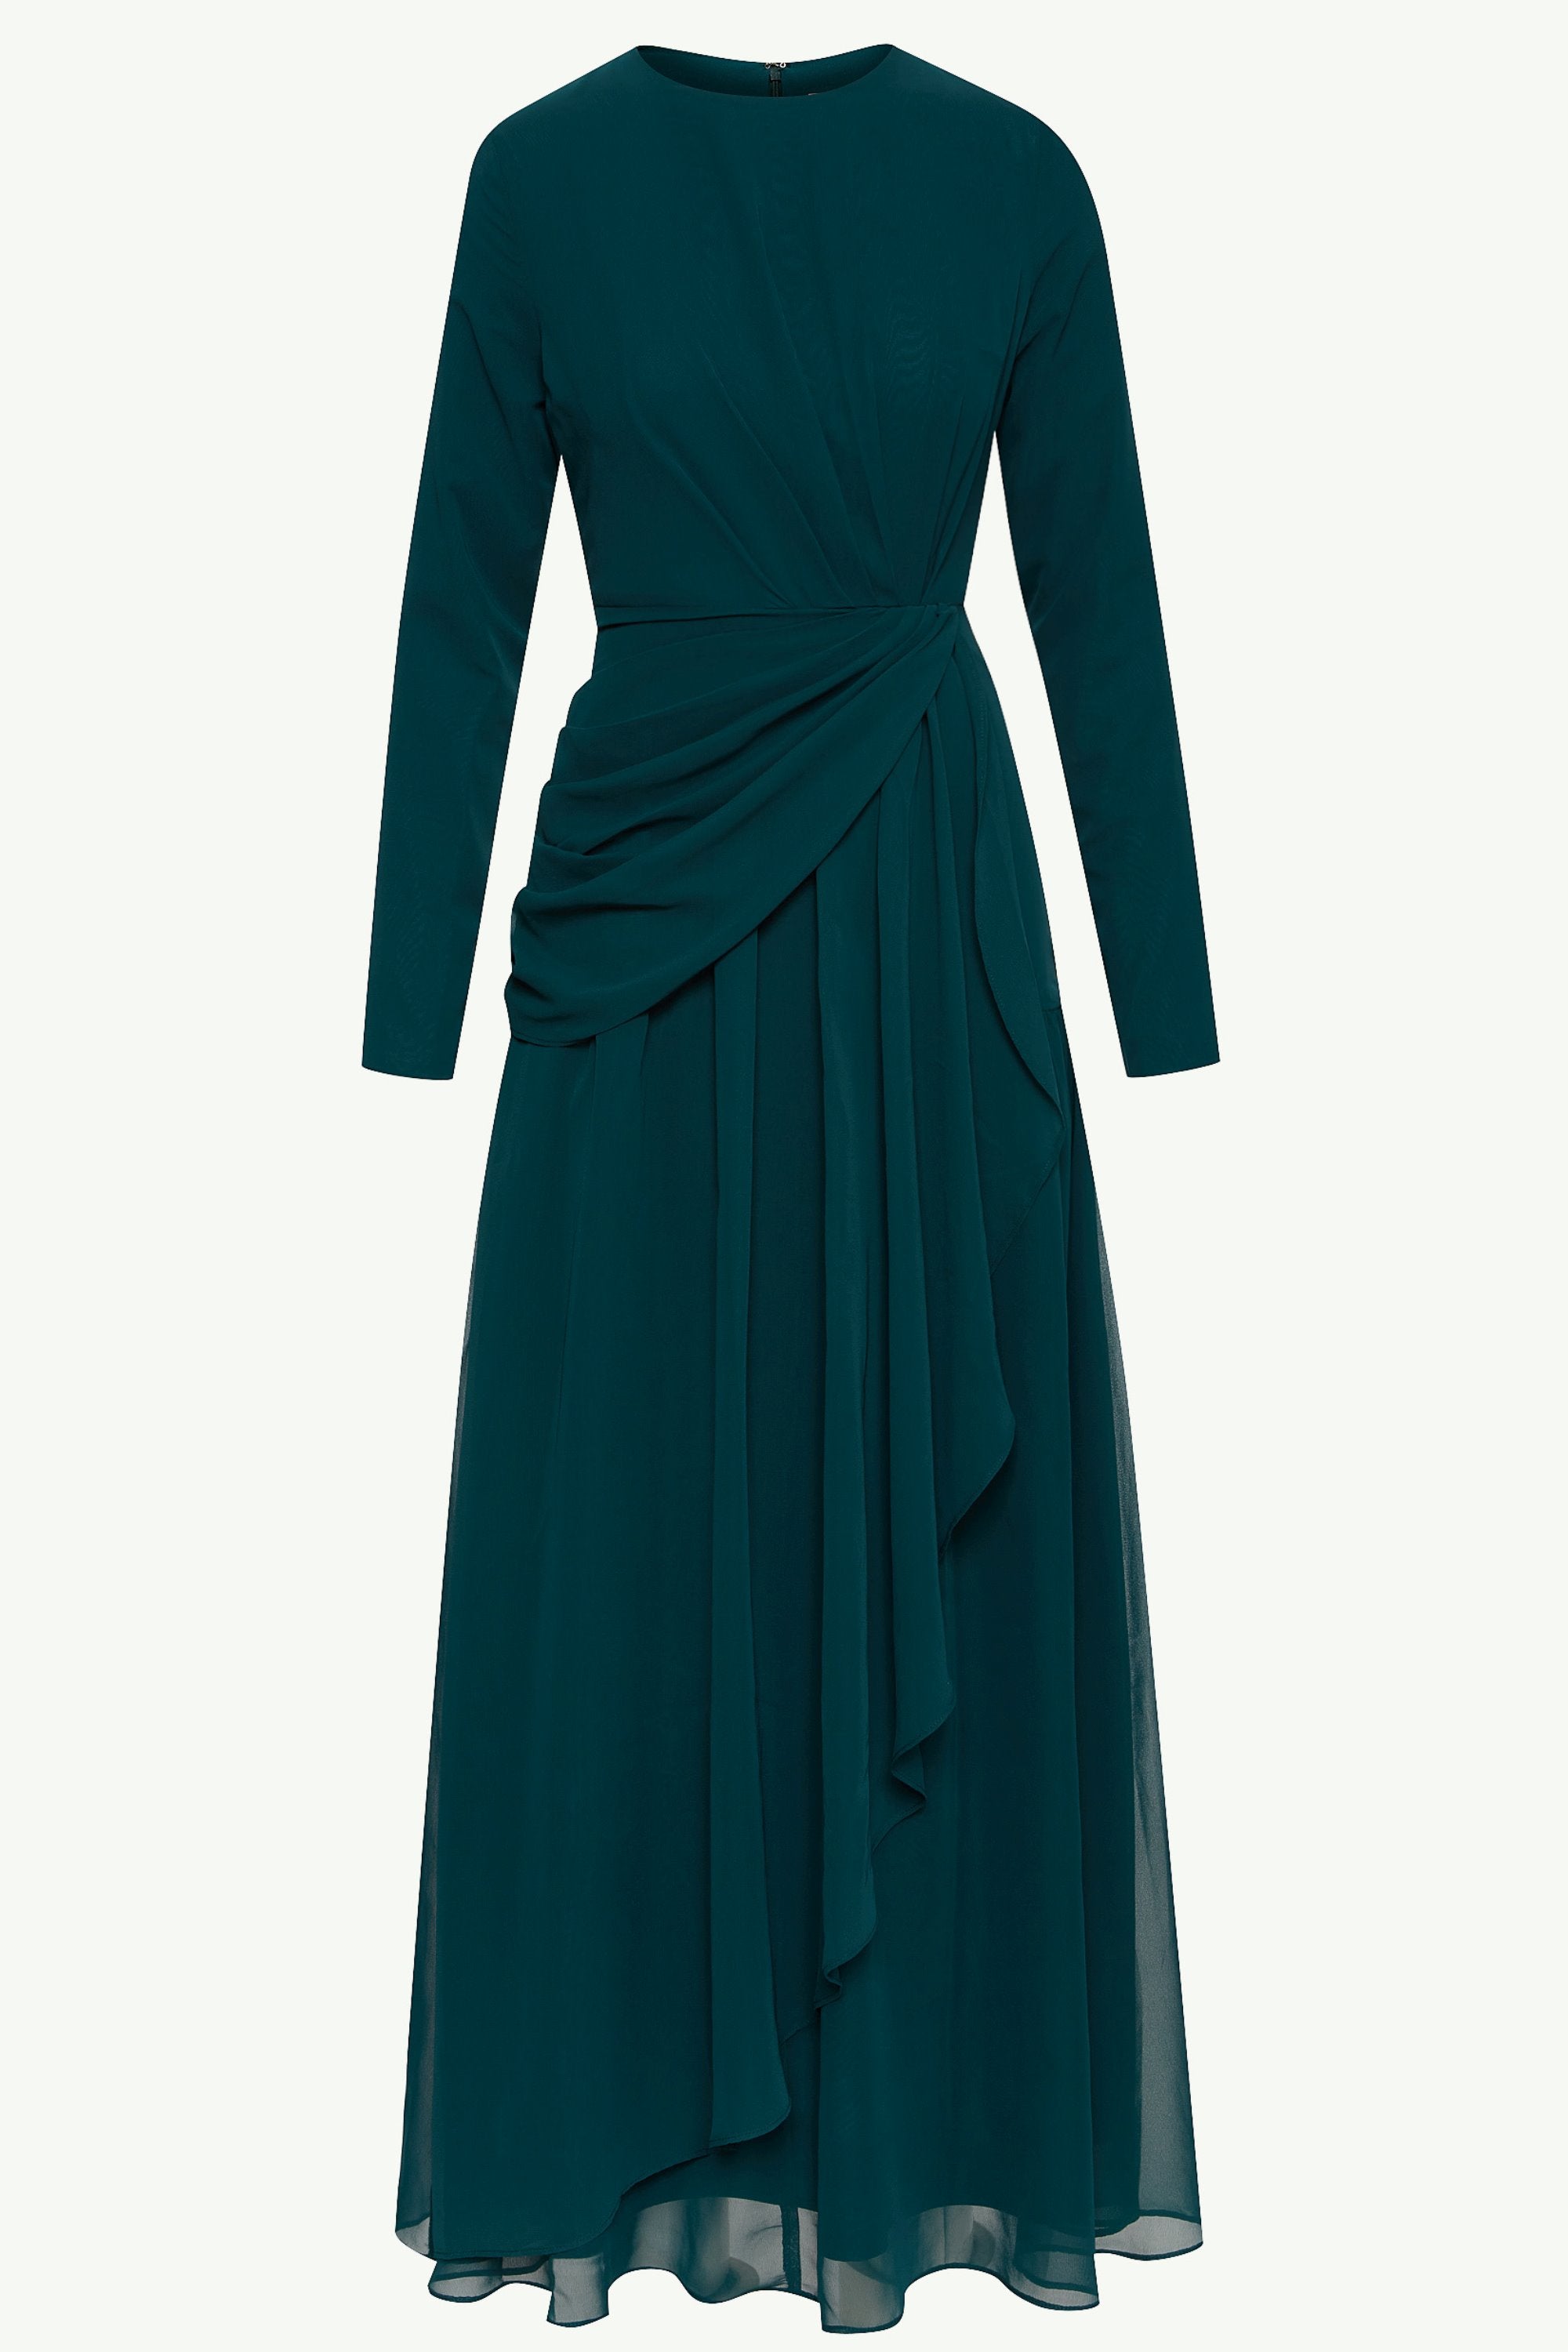 Huda Chiffon Maxi Dress - Teal Clothing Veiled 